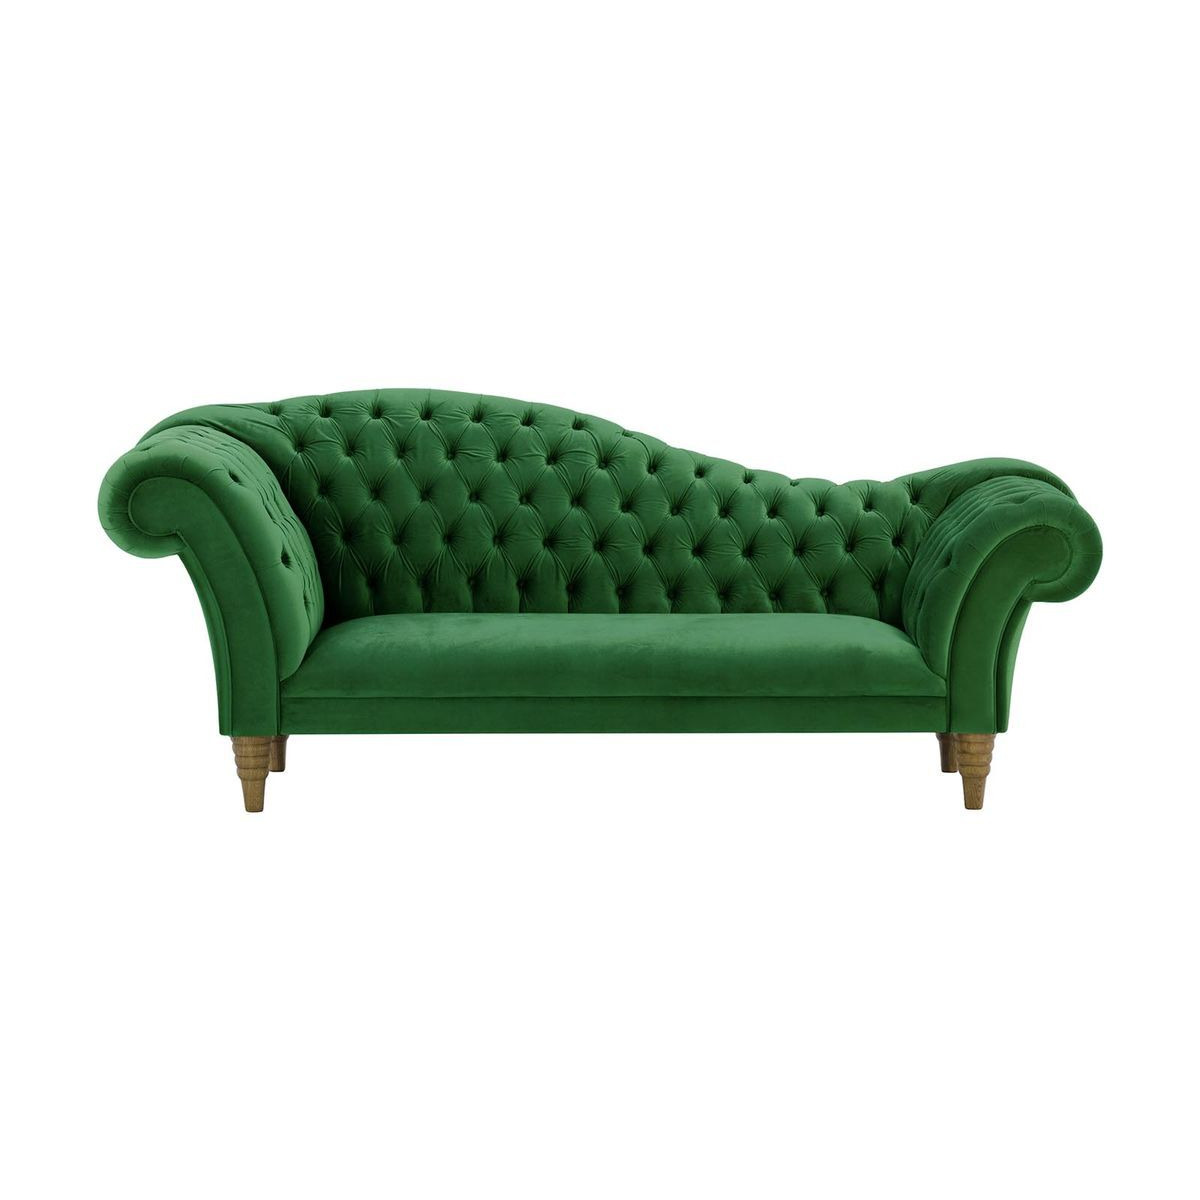 Chester Chaise Lounge Sofa, dark green, Leg colour: like oak - image 1